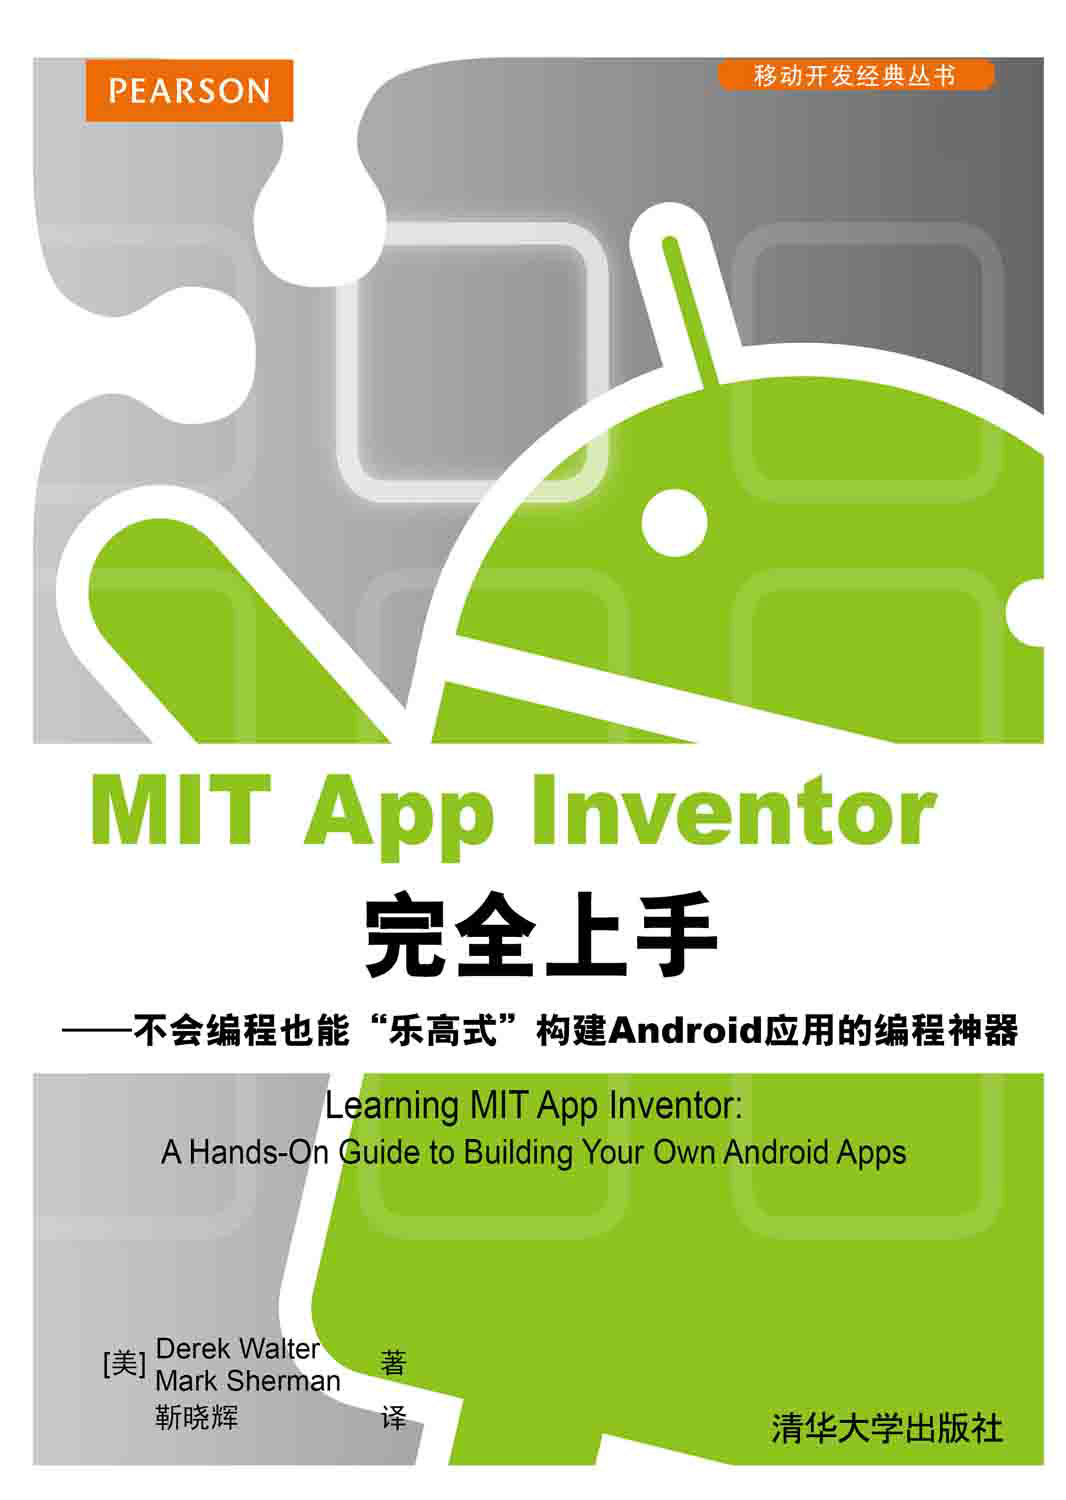 MIT App Inventor完全上手——不會編程也能“樂高式”構建Android套用